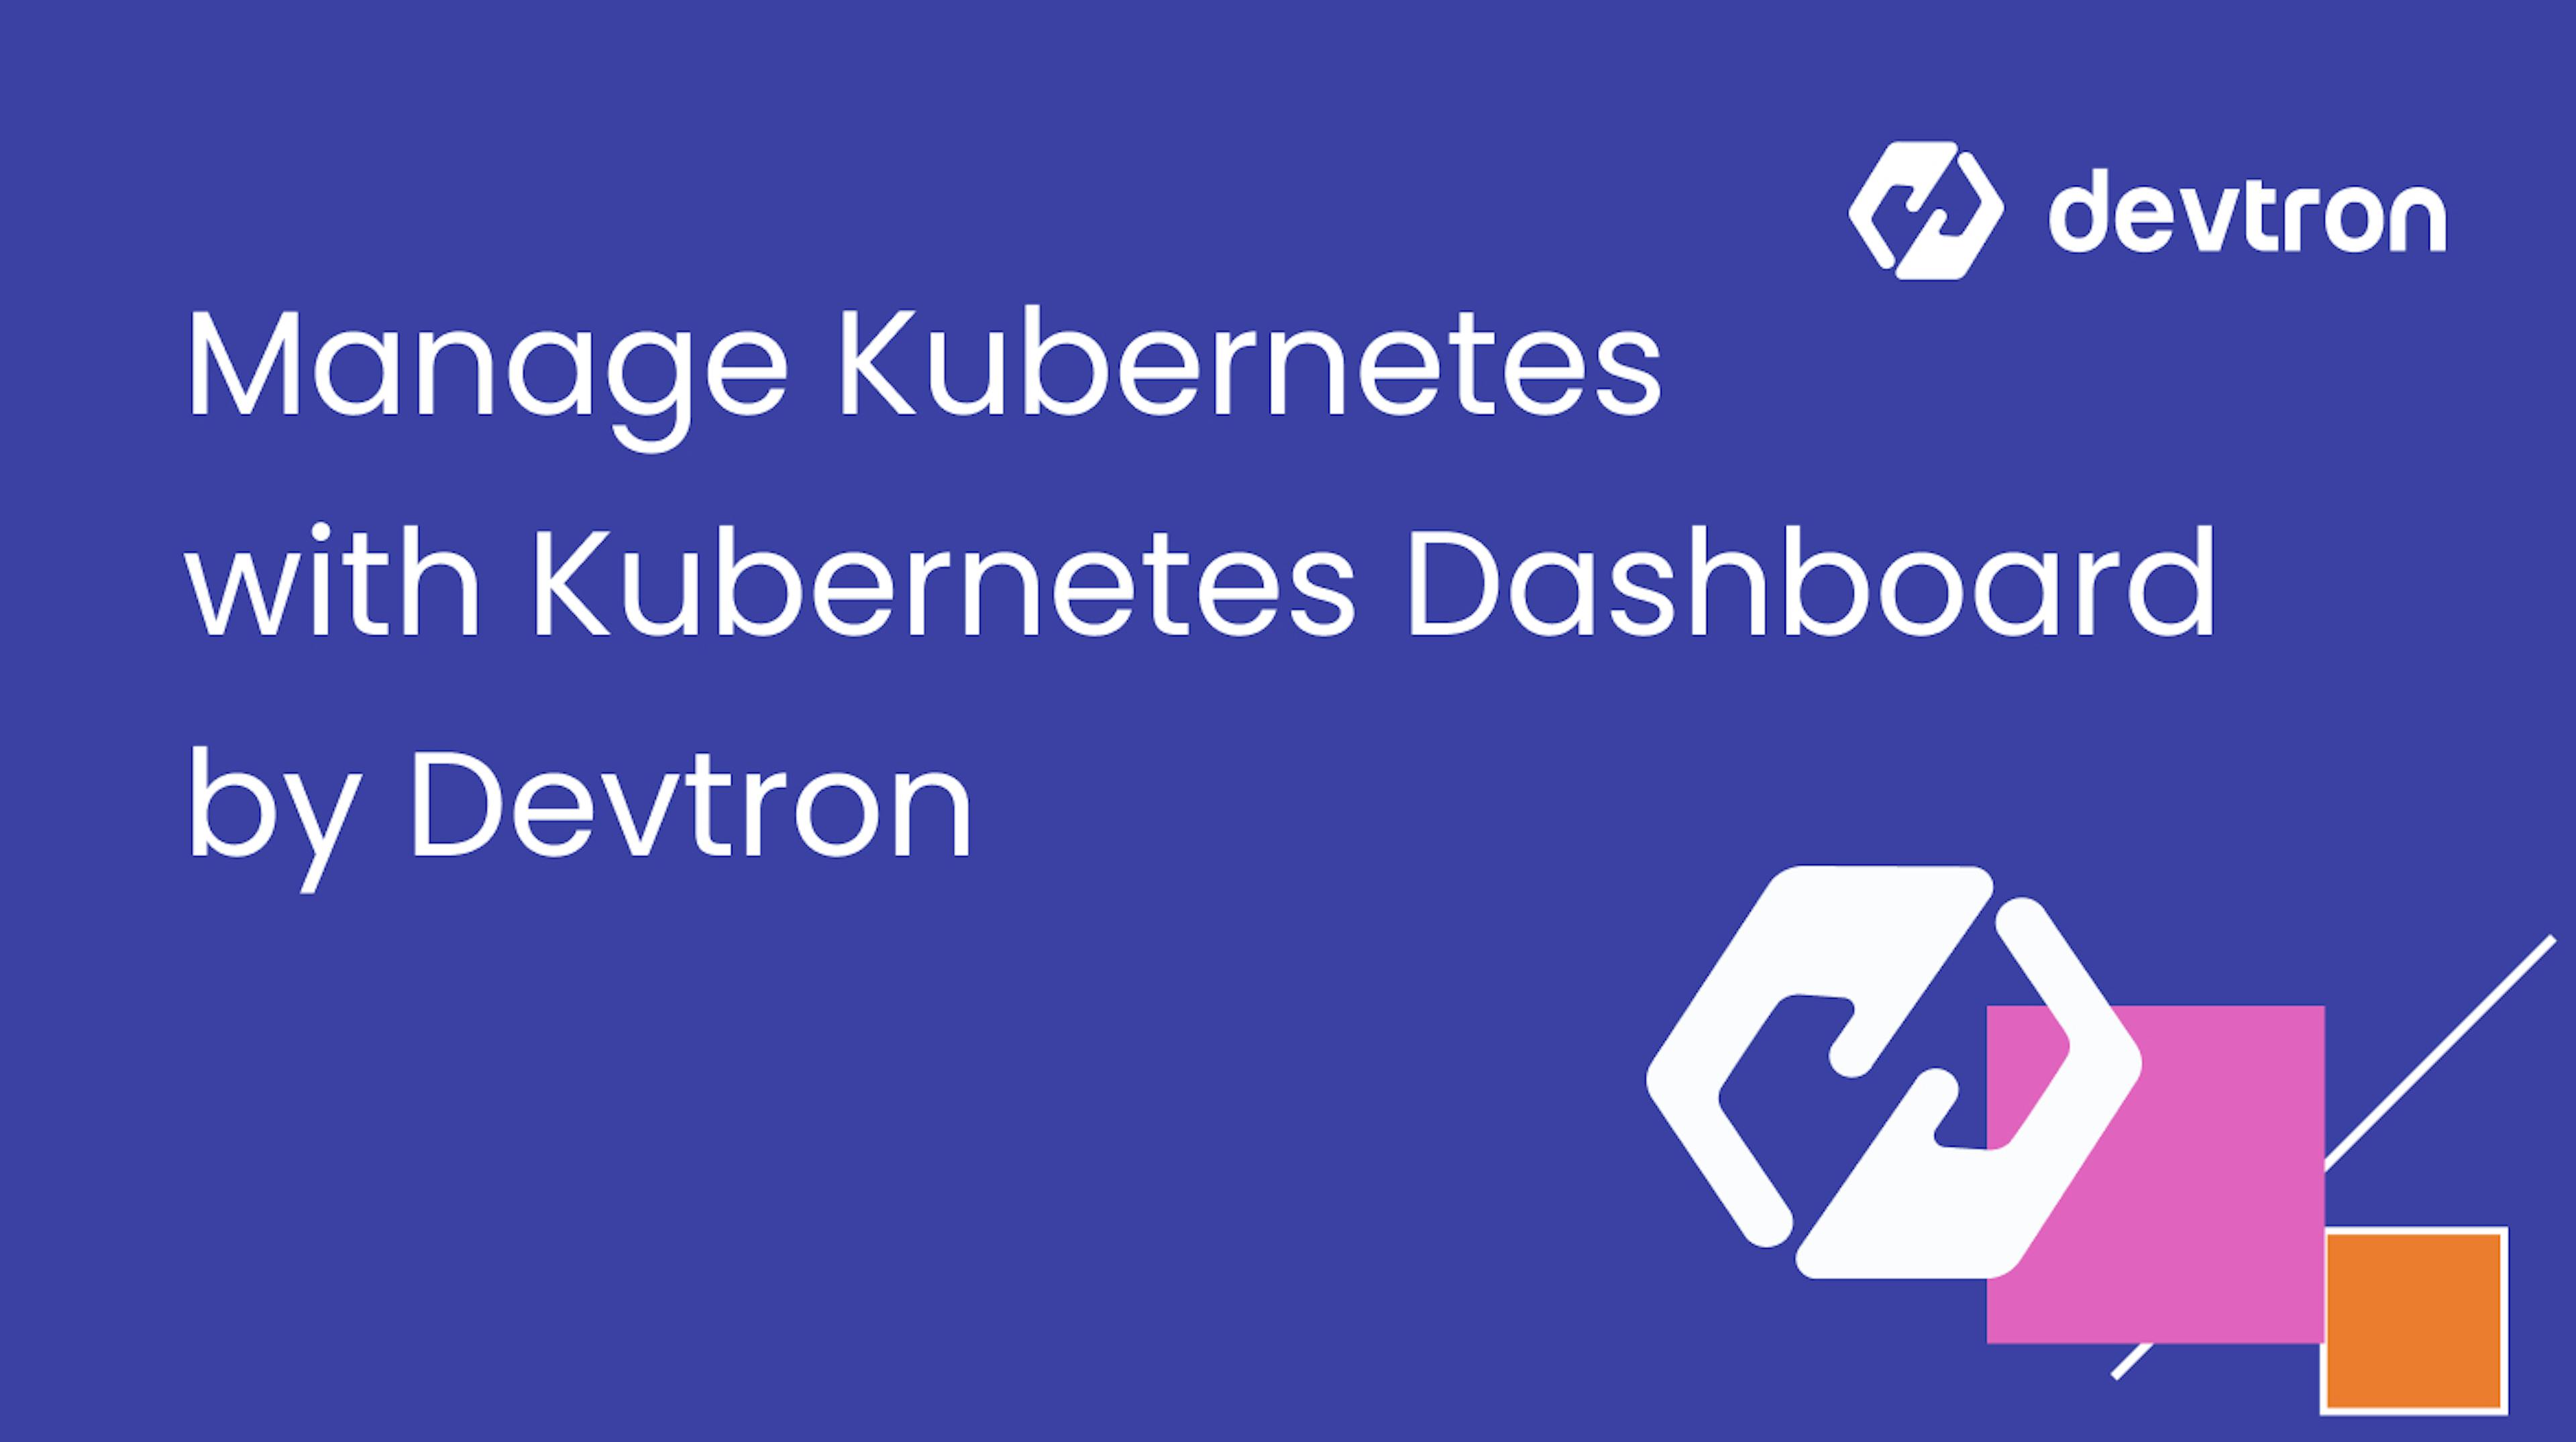 featured image - 如何使用 Devtron 的 Kubernetes 仪表板像专业人士一样管理 Kubernetes